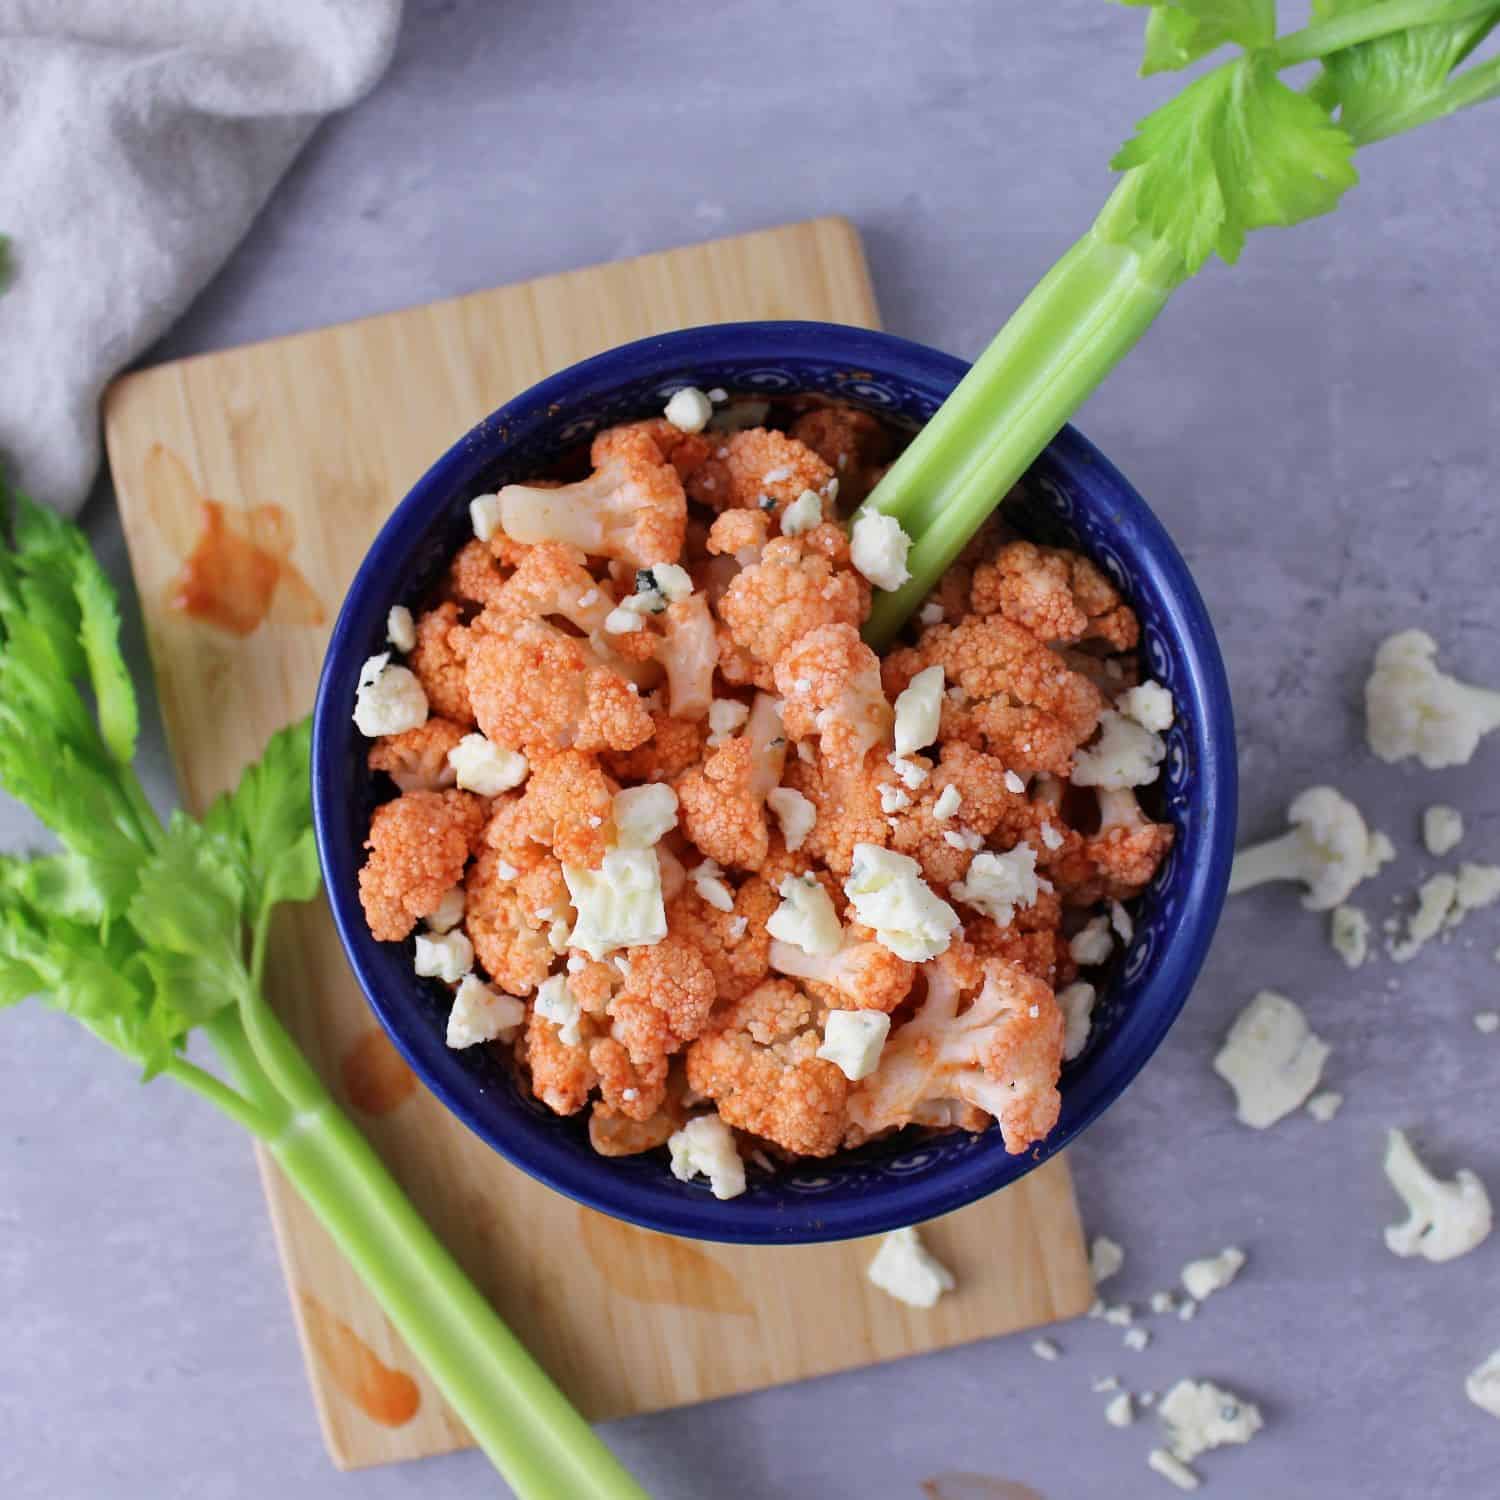 Featured image for “5-Minute Buffalo Cauliflower Snack Recipe”